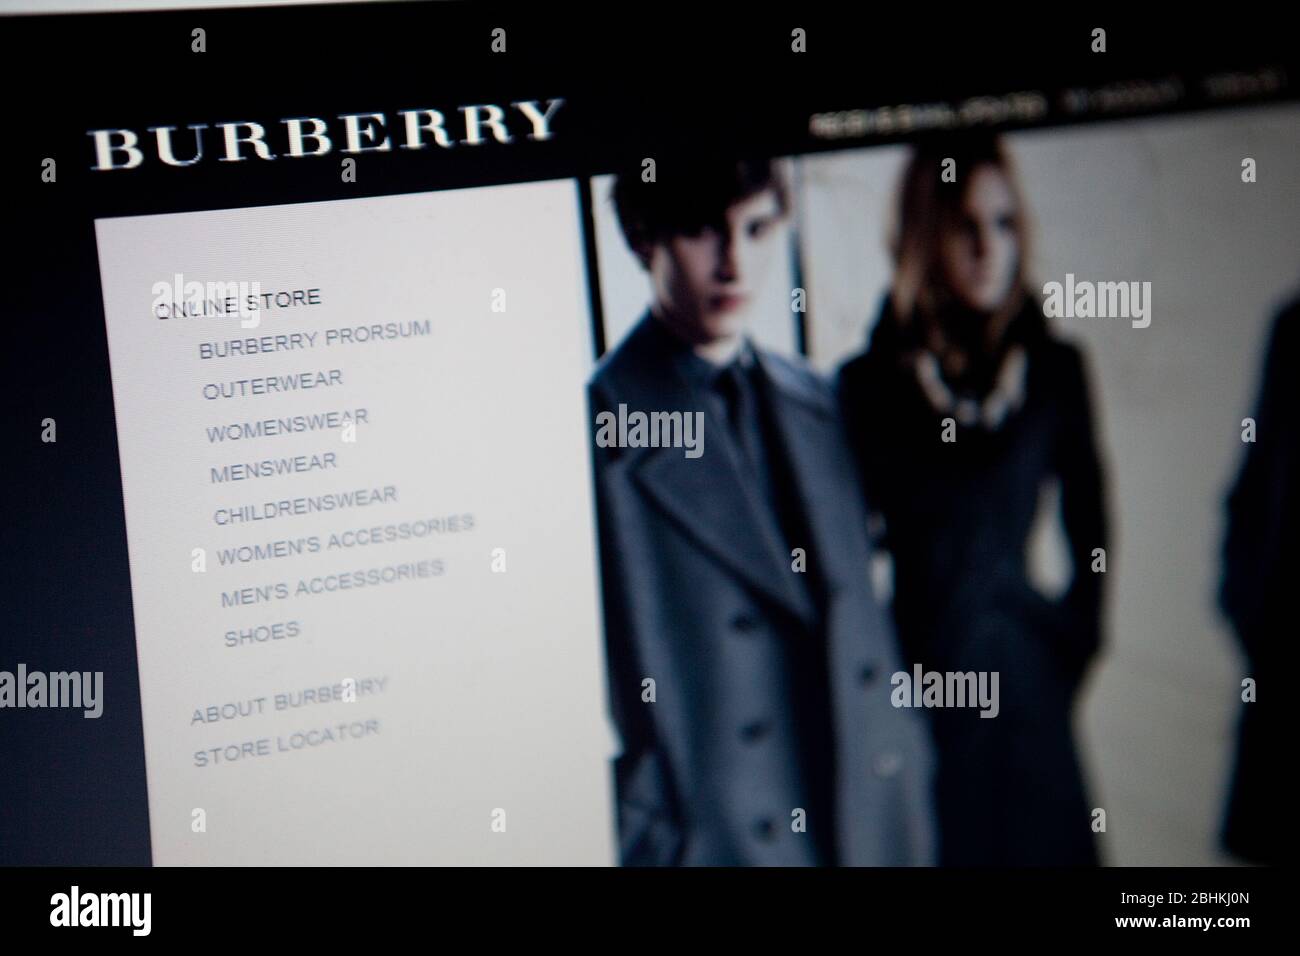 burberry website